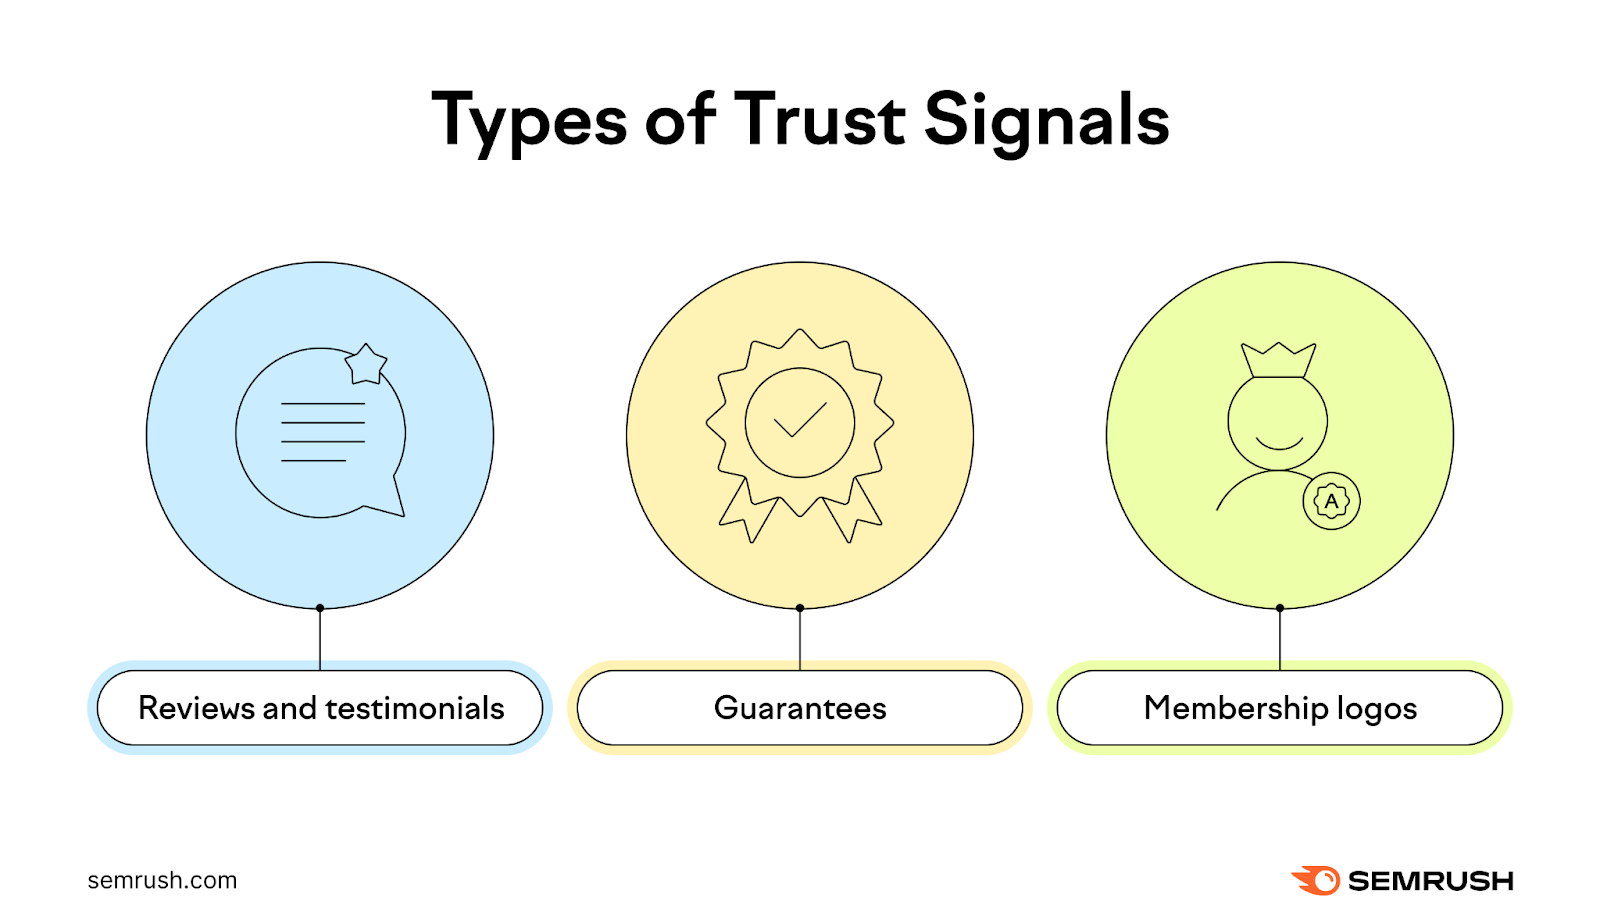 Types of trust signals illustrated